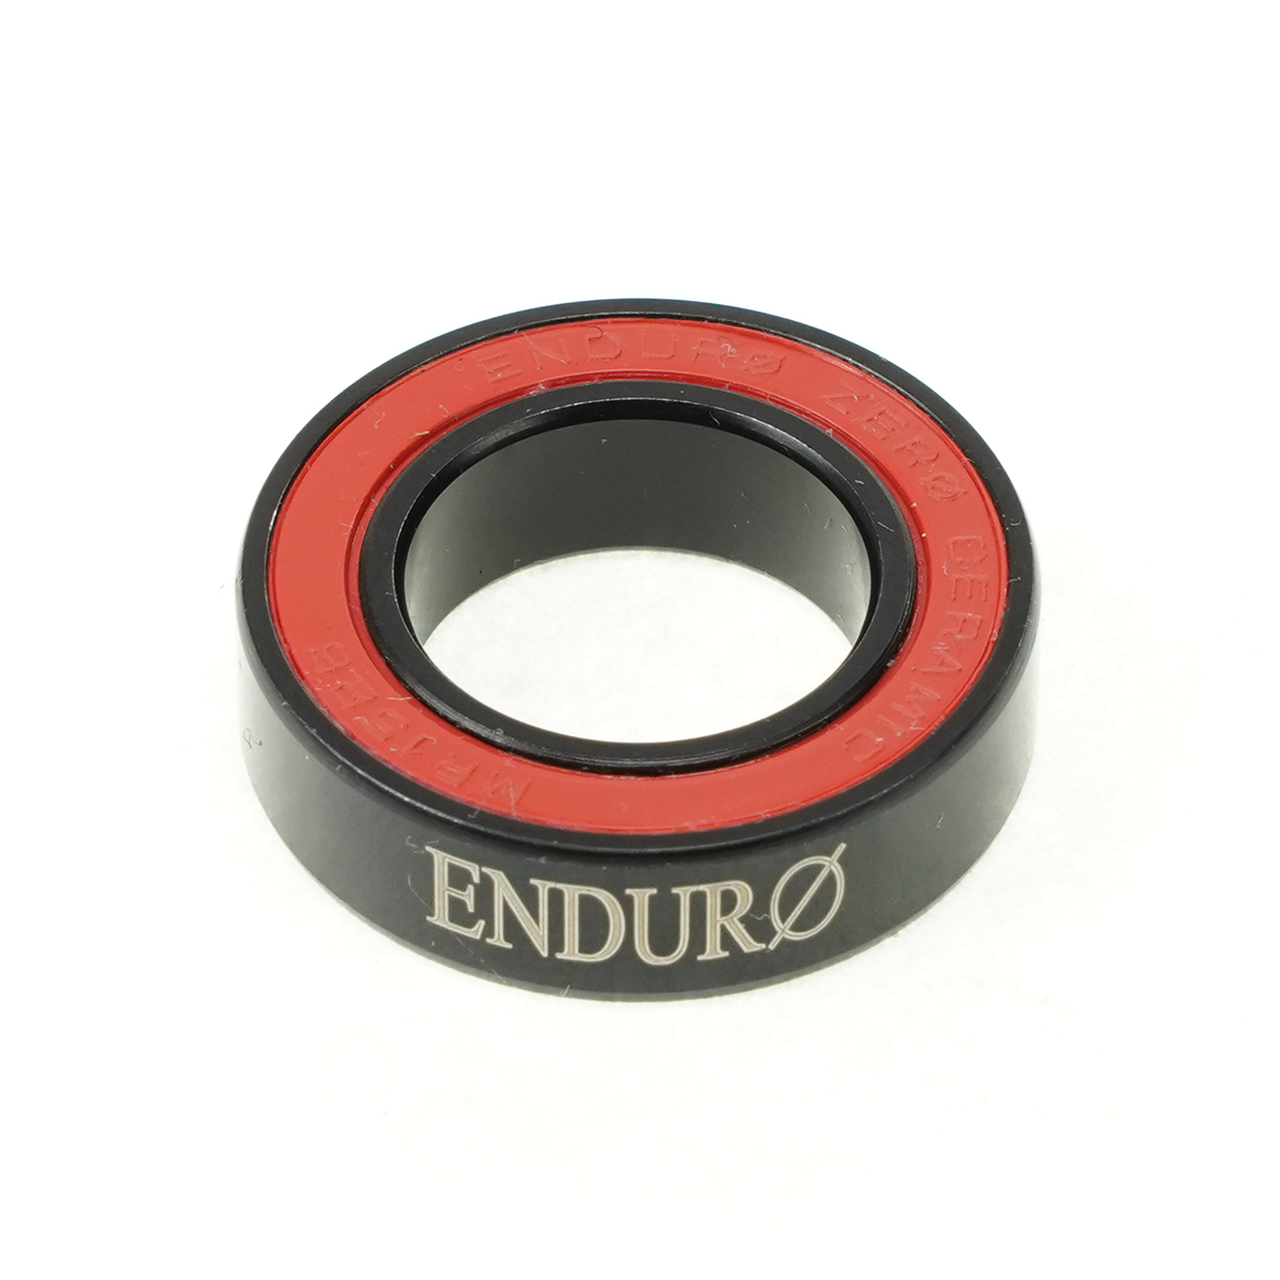 Enduro CO MR 15267 LLB - Enduro Zero, Black-Oxide, Ceramic Hybrid, ABEC-5, Radial Bearing (C3 Clearance) - 15mm x 26mm x 7mm